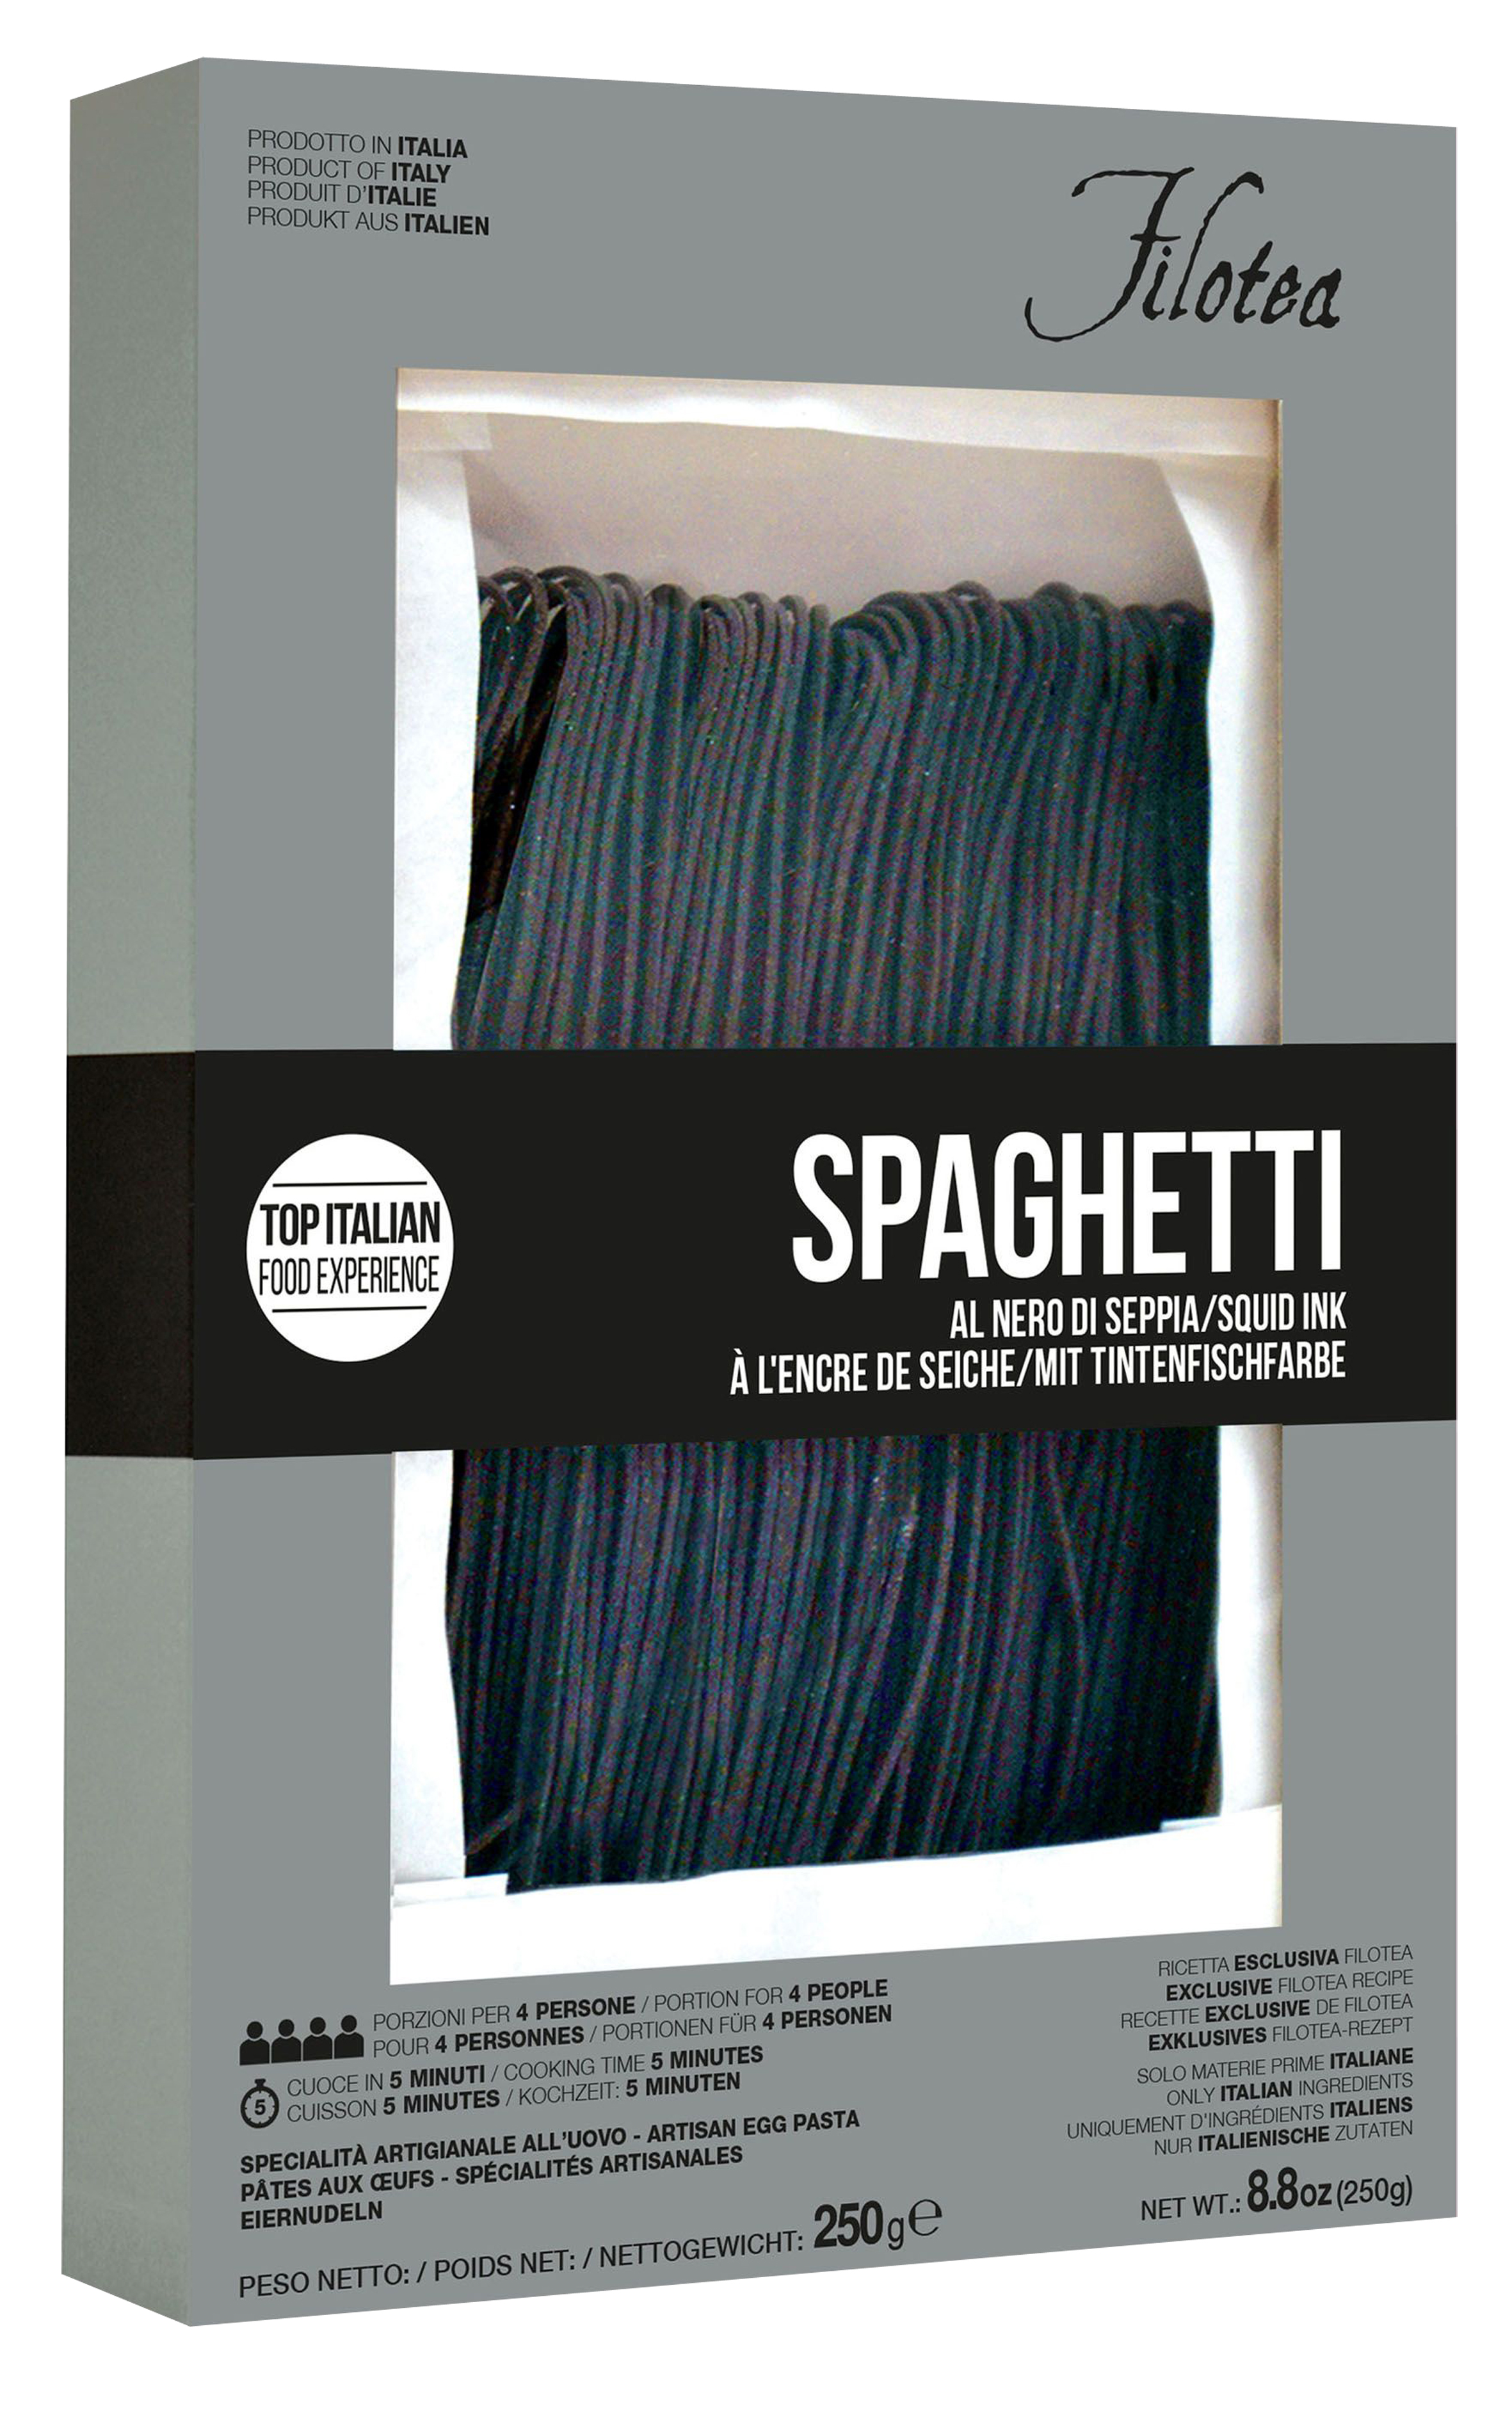 Spaghetti Chitarra al nero di Seppia, Spaghetti, schwarz, mit Tintenfisch, 250 g